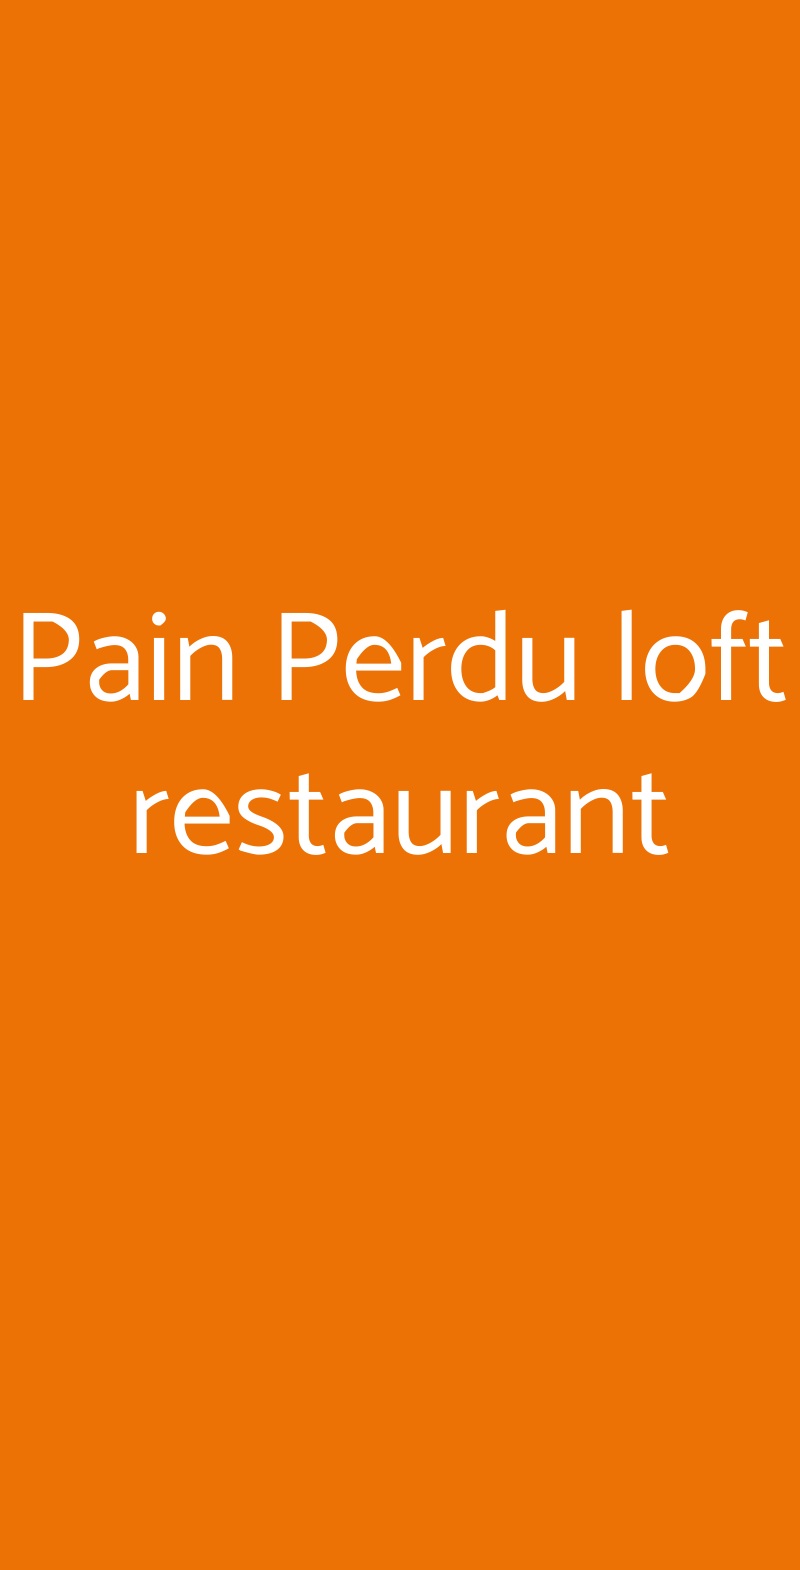 Pain Perdu loft restaurant Torino menù 1 pagina